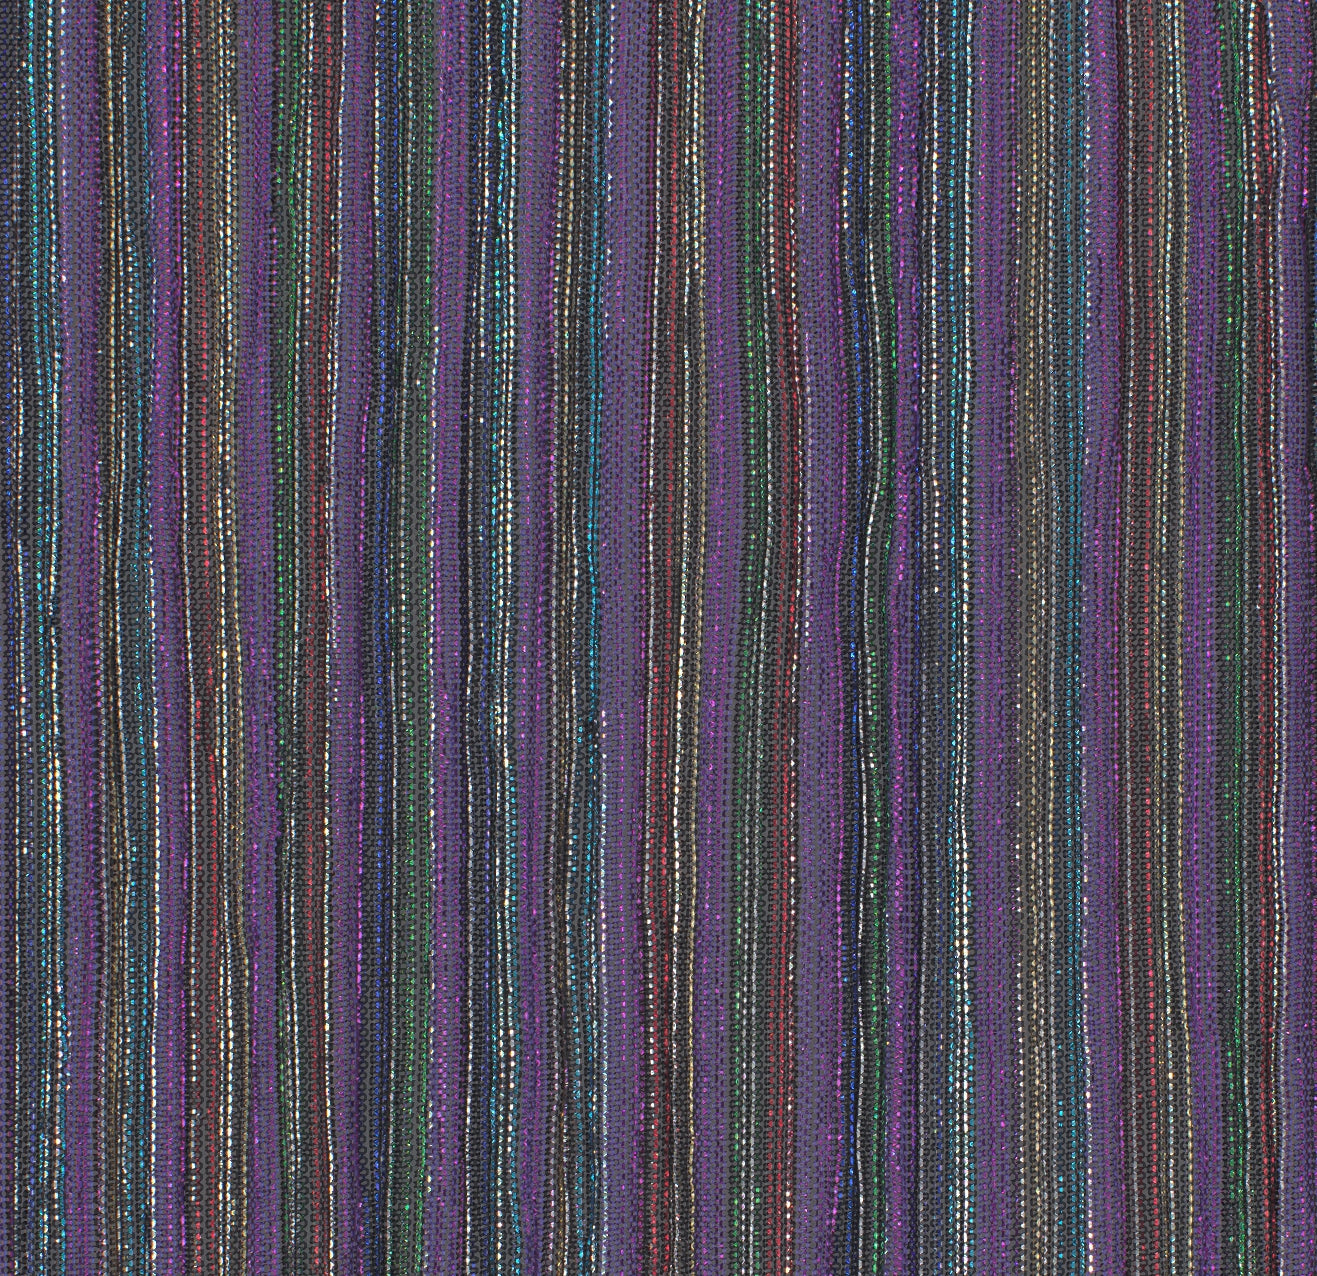 18015-03 Purple Muti Metallic Pleat Plain Dyed Blend blend knit metallic plain dyed pleat polyester purple Metallic, Pleat - knit fabric - woven fabric - fabric company - fabric wholesale - fabric b2b - fabric factory - high quality fabric - hong kong fabric - fabric hk - acetate fabric - cotton fabric - linen fabric - metallic fabric - nylon fabric - polyester fabric - spandex fabric - chun wing hing - cwh hk - fabric worldwide ship - 針織布 - 梳織布 - 布料公司- 布料批發 - 香港布料 - 秦榮興